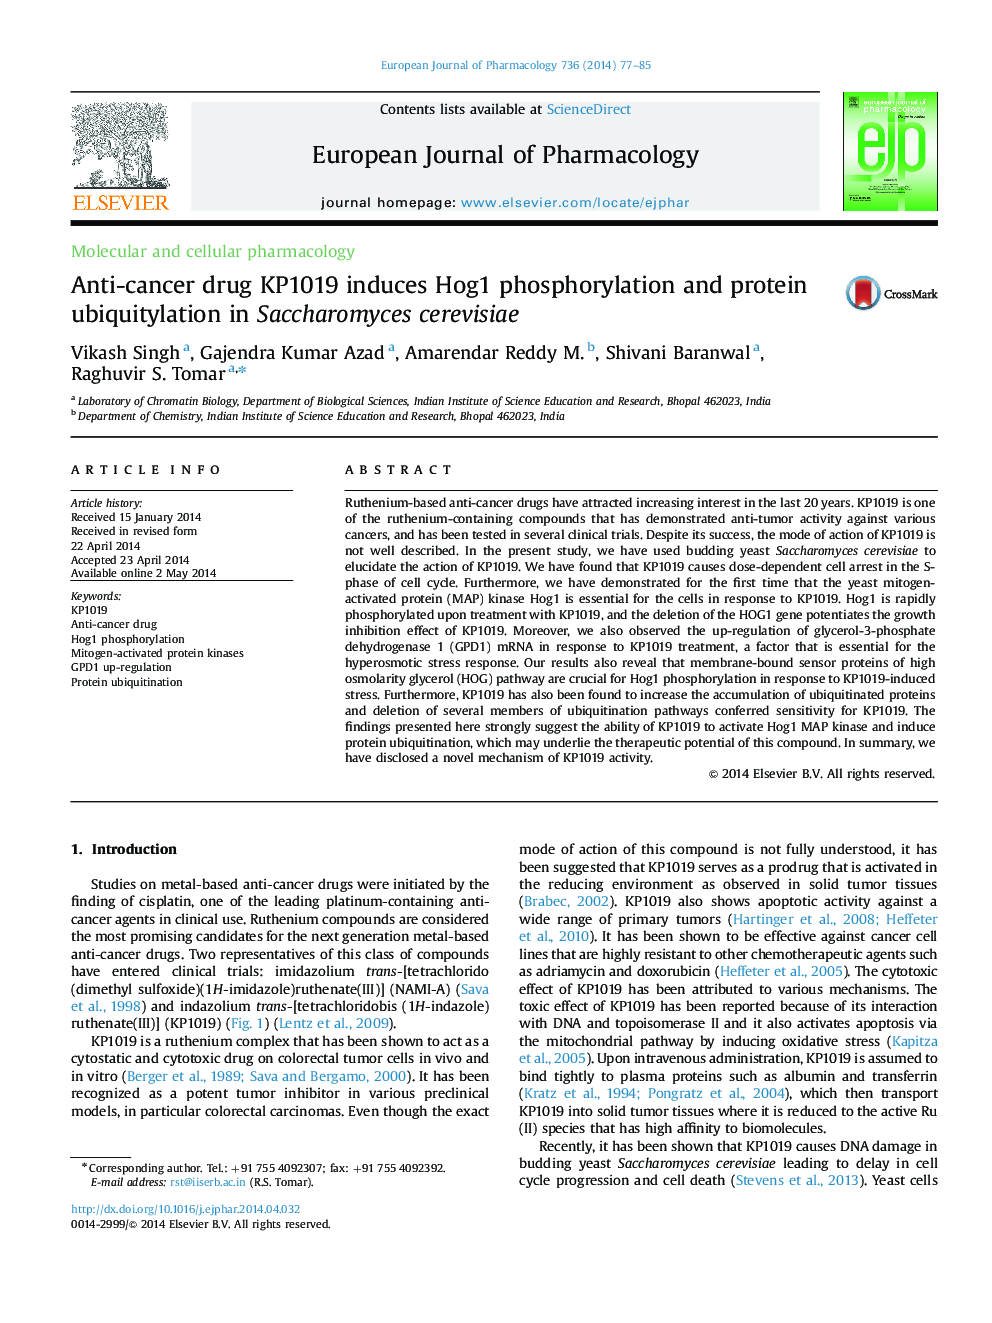 Anti-cancer drug KP1019 induces Hog1 phosphorylation and protein ubiquitylation in Saccharomyces cerevisiae